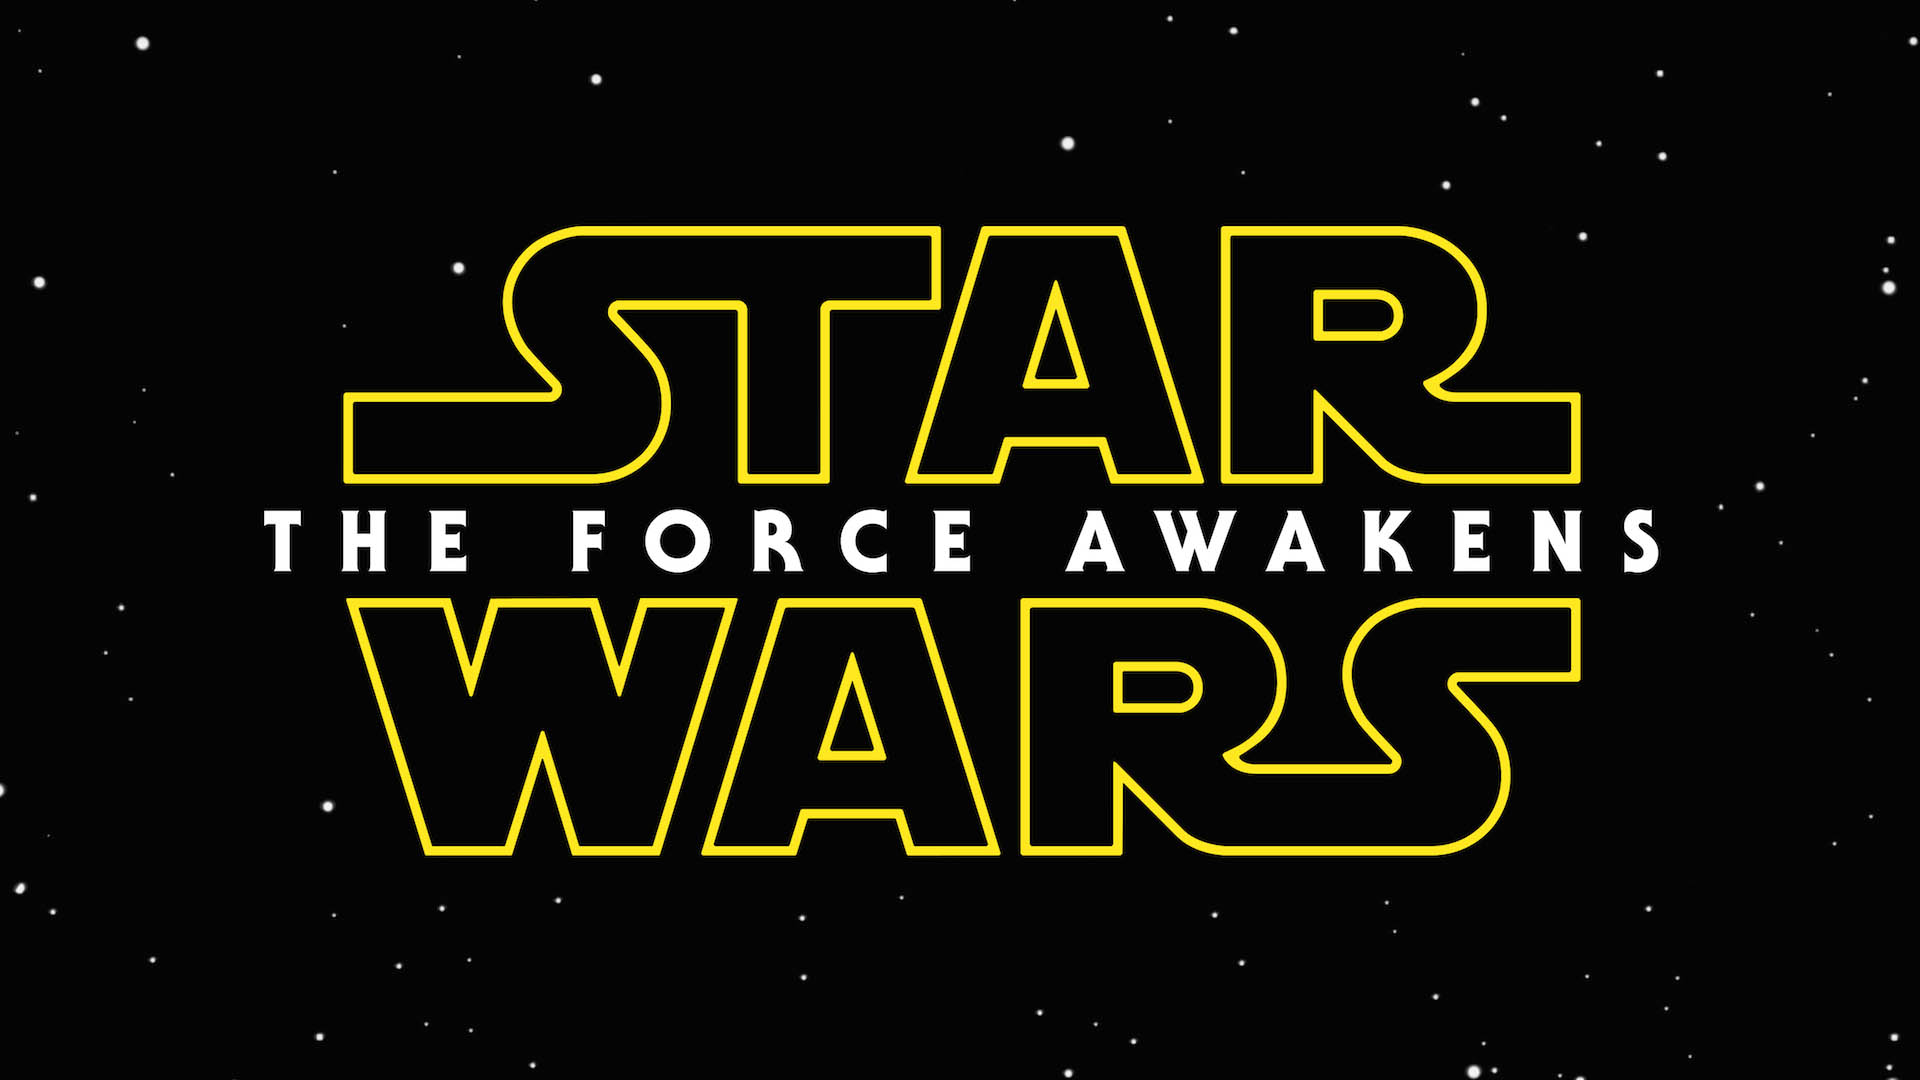 Wars 7 The Force Awakens Logo   1920x1080   Full HD 169   Wallpaper